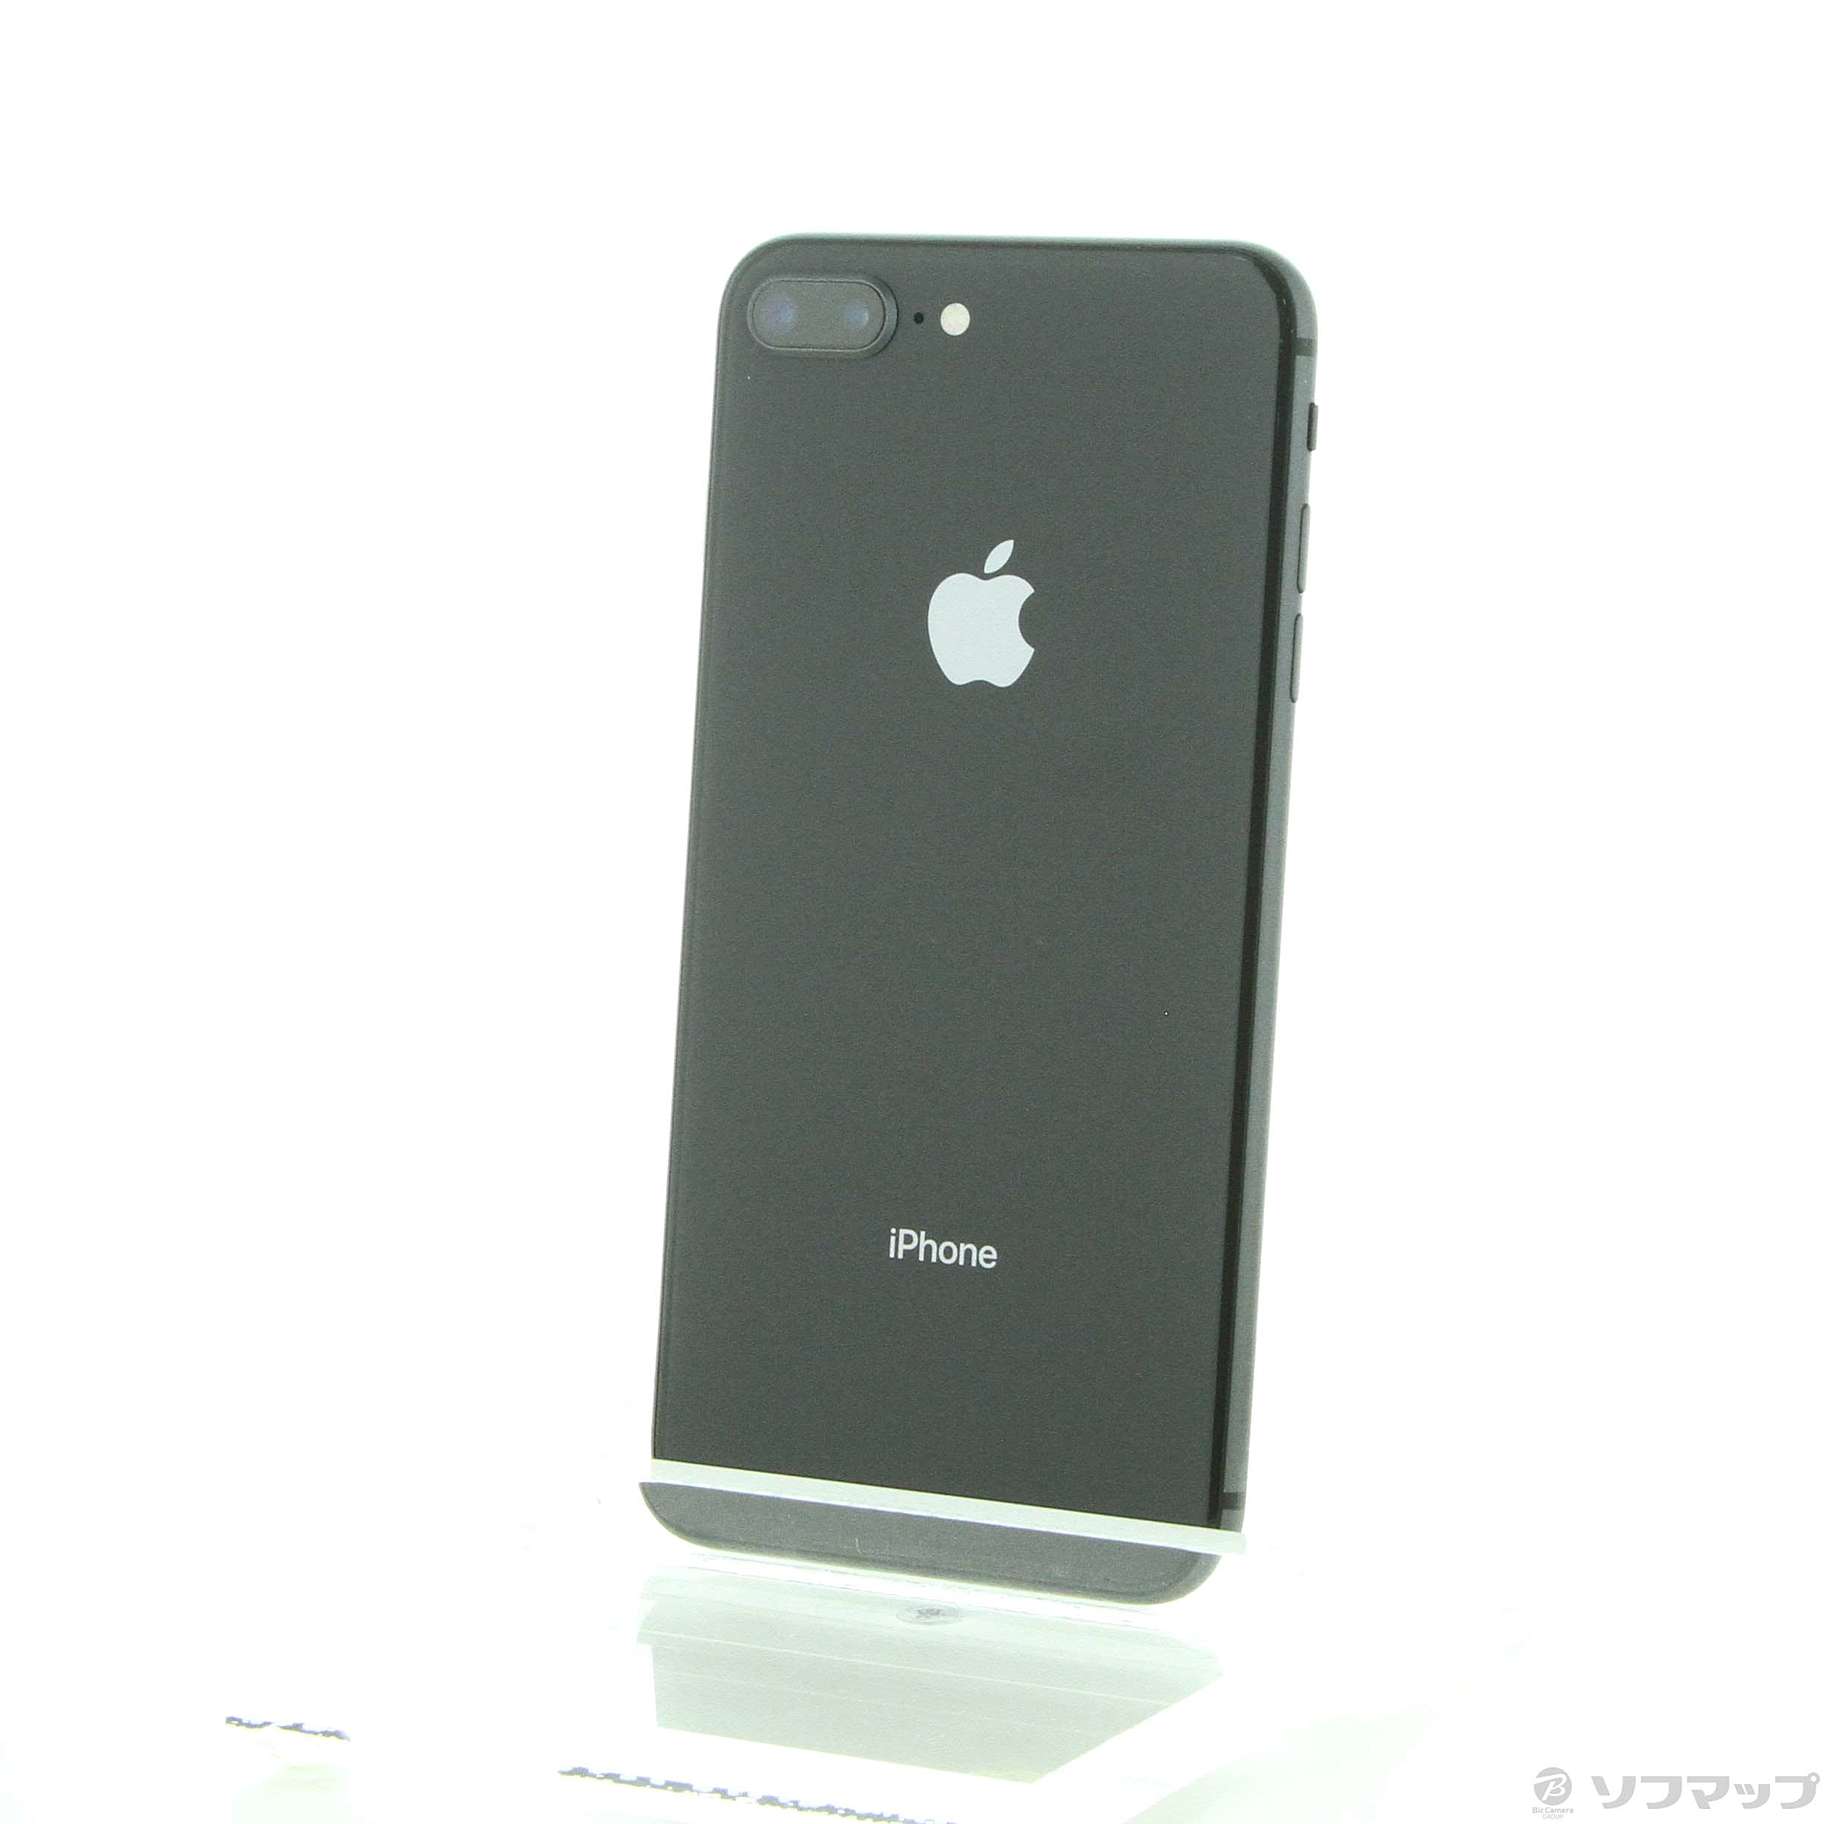 iPhone 8 スペースグレイ 128 GB SIMフリー